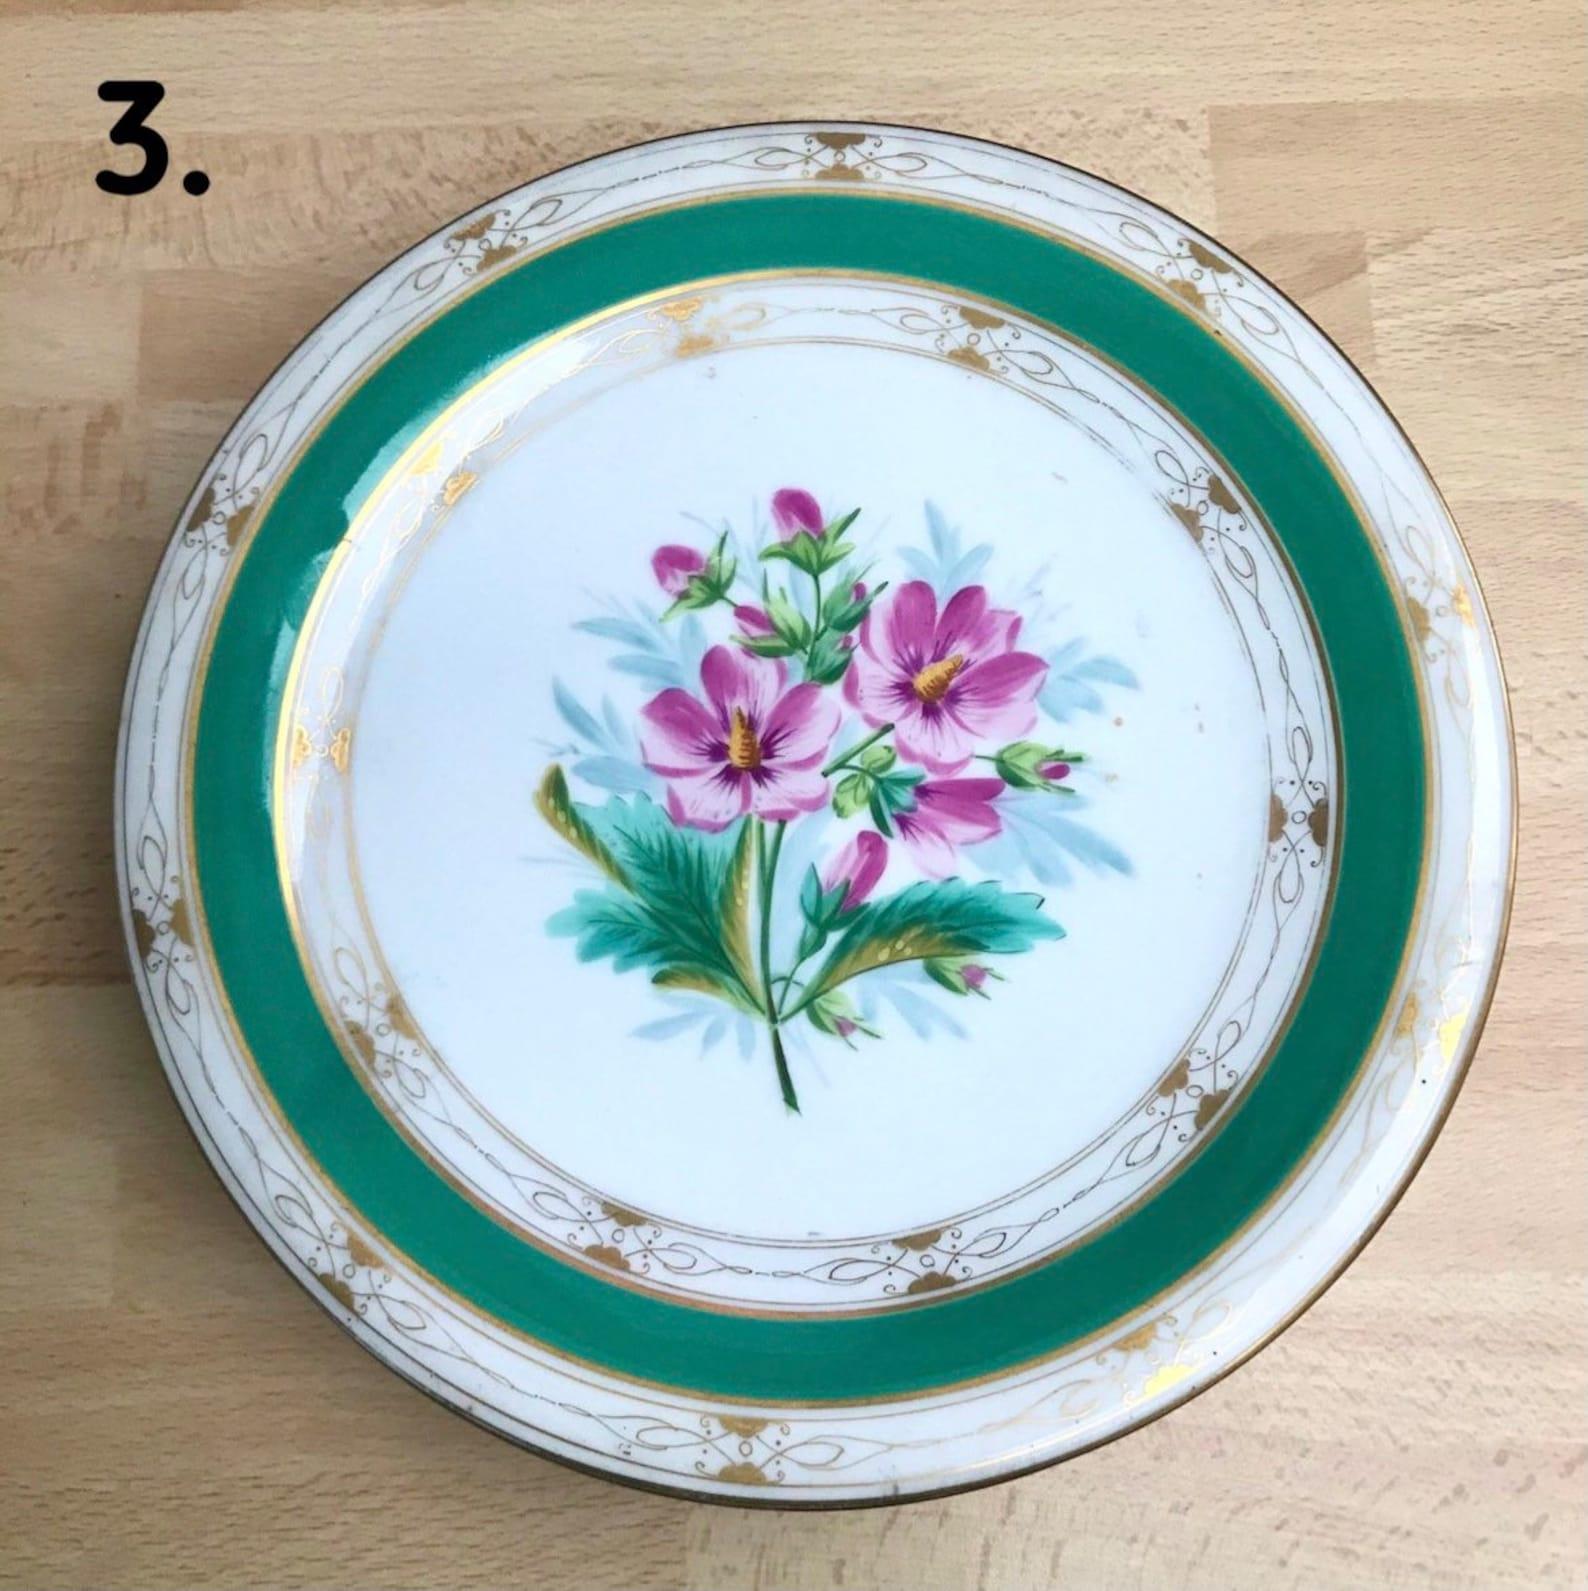 19th Century Antique Collectible Plates 19 Century Porcelain Plates For Sale